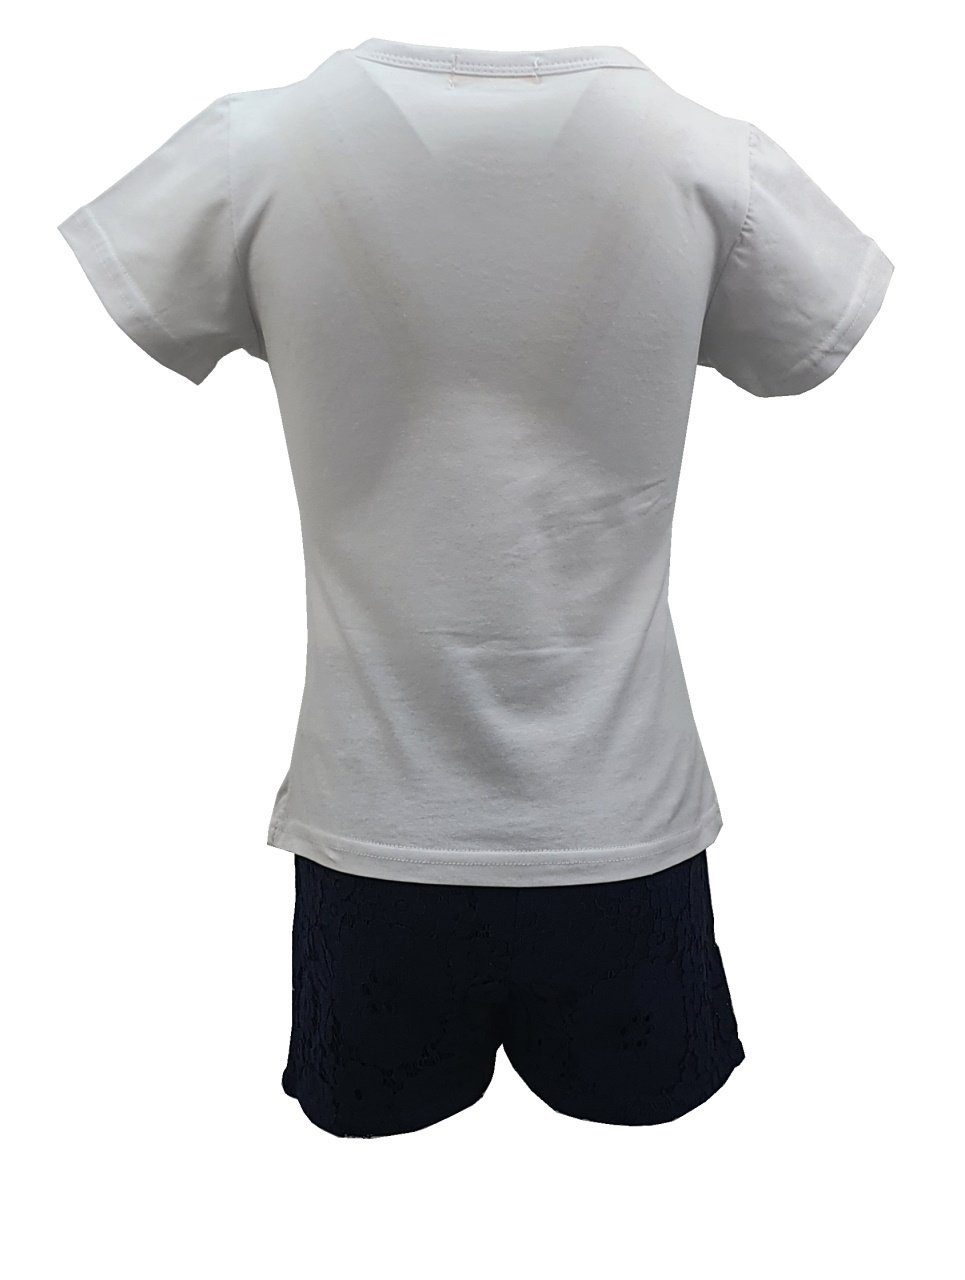 & Shorts Sommer + Set, Girls (T-Shirt Fashion T-Shirt Weiß-Blau + Shorts) MS241 T-Shirt Shorts,